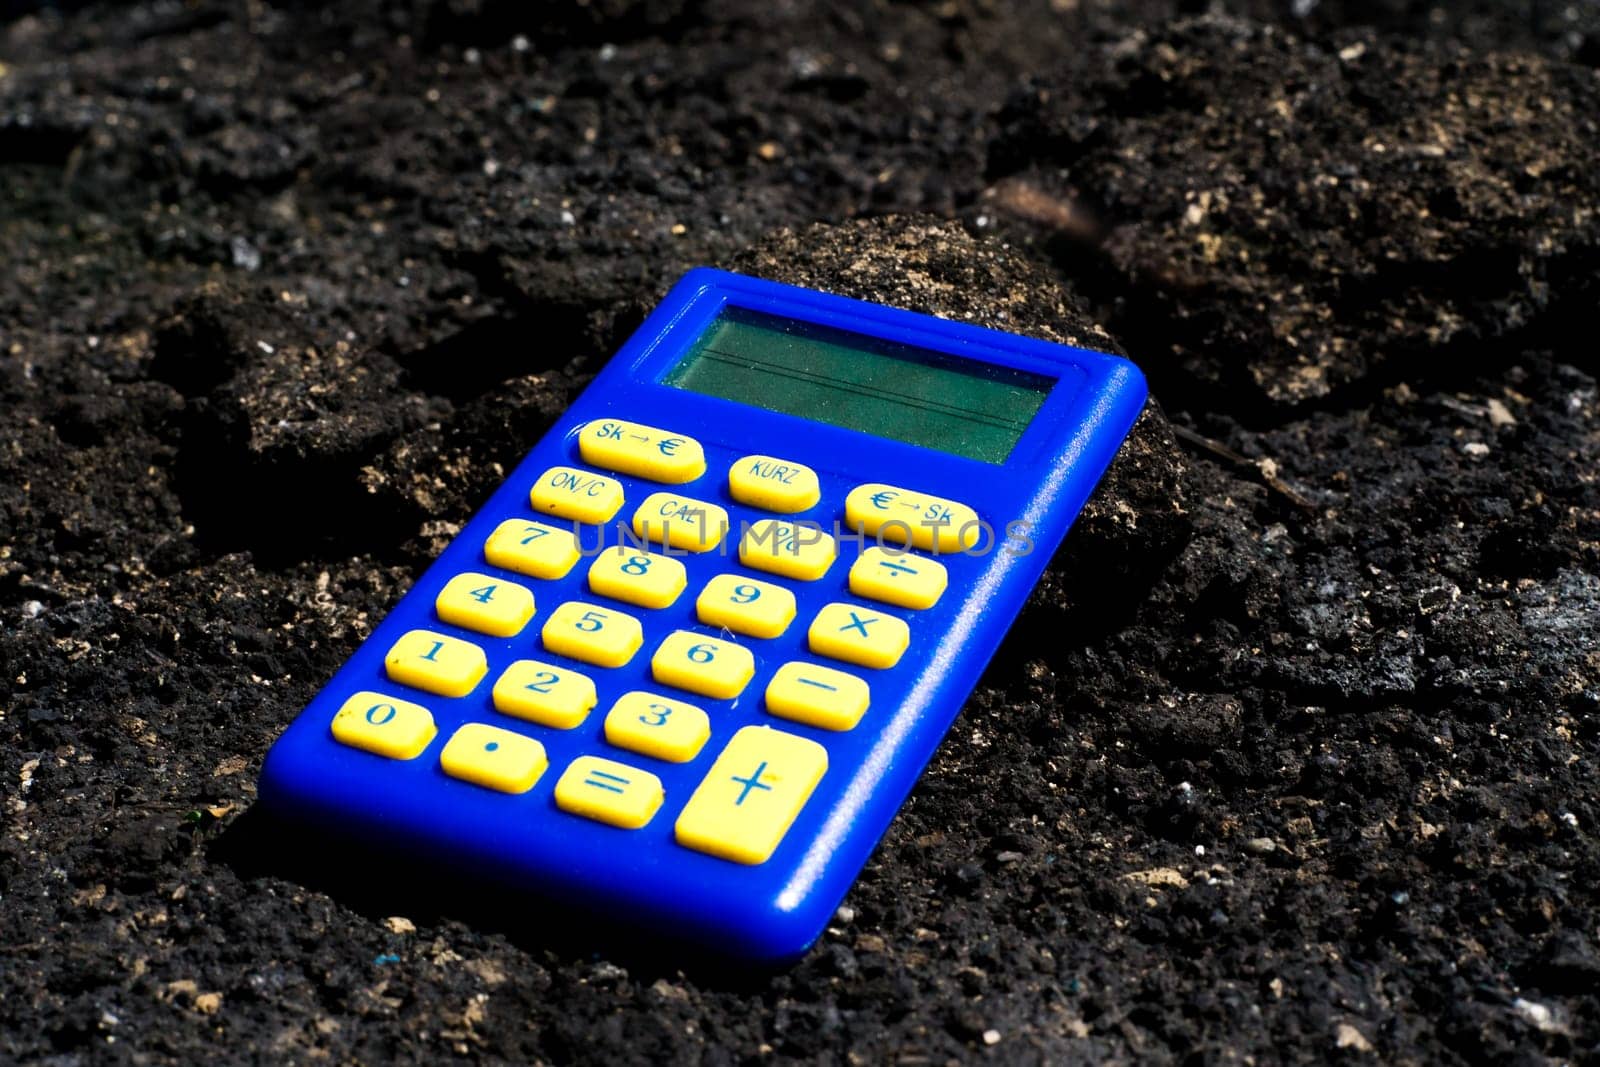 Blue calculator in dark soil, burnt ground after a fire